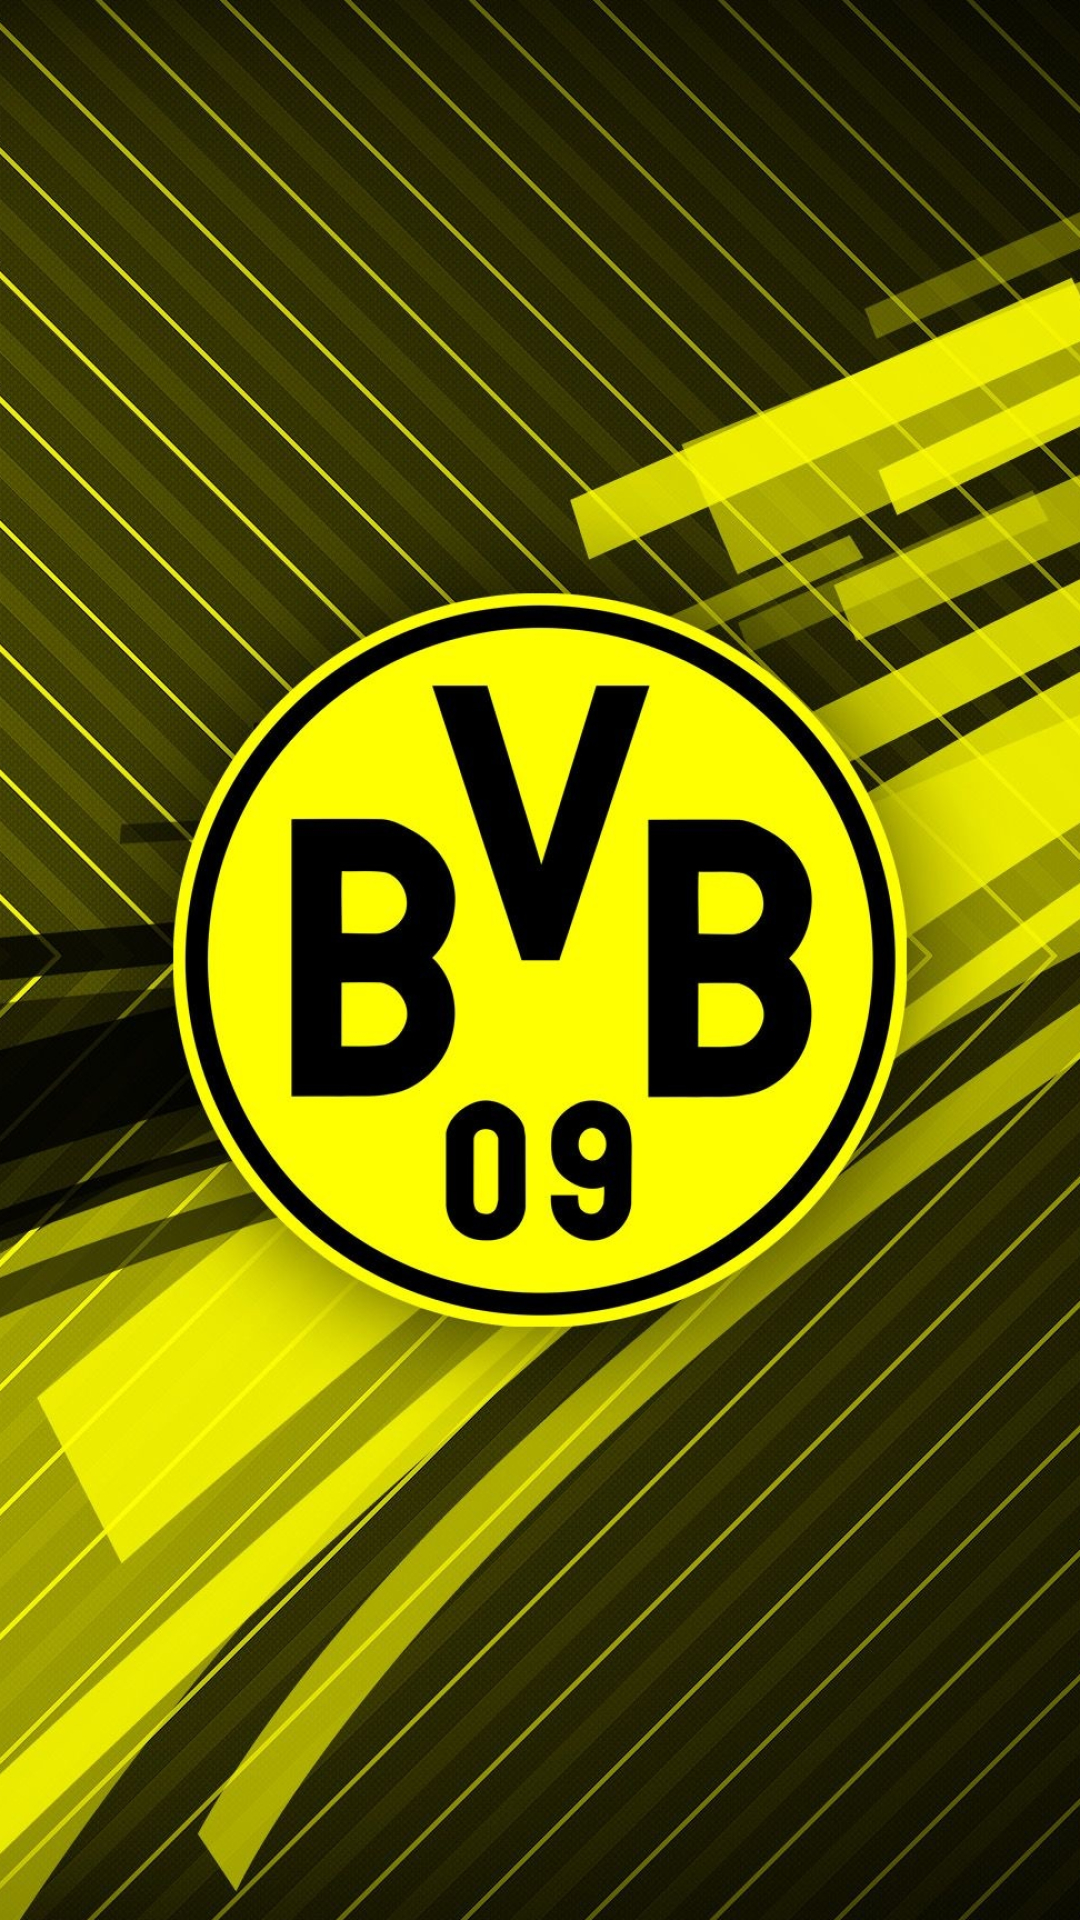 Borussia Dortmund: German football team logo, BVB 09. 1080x1920 Full HD Background.